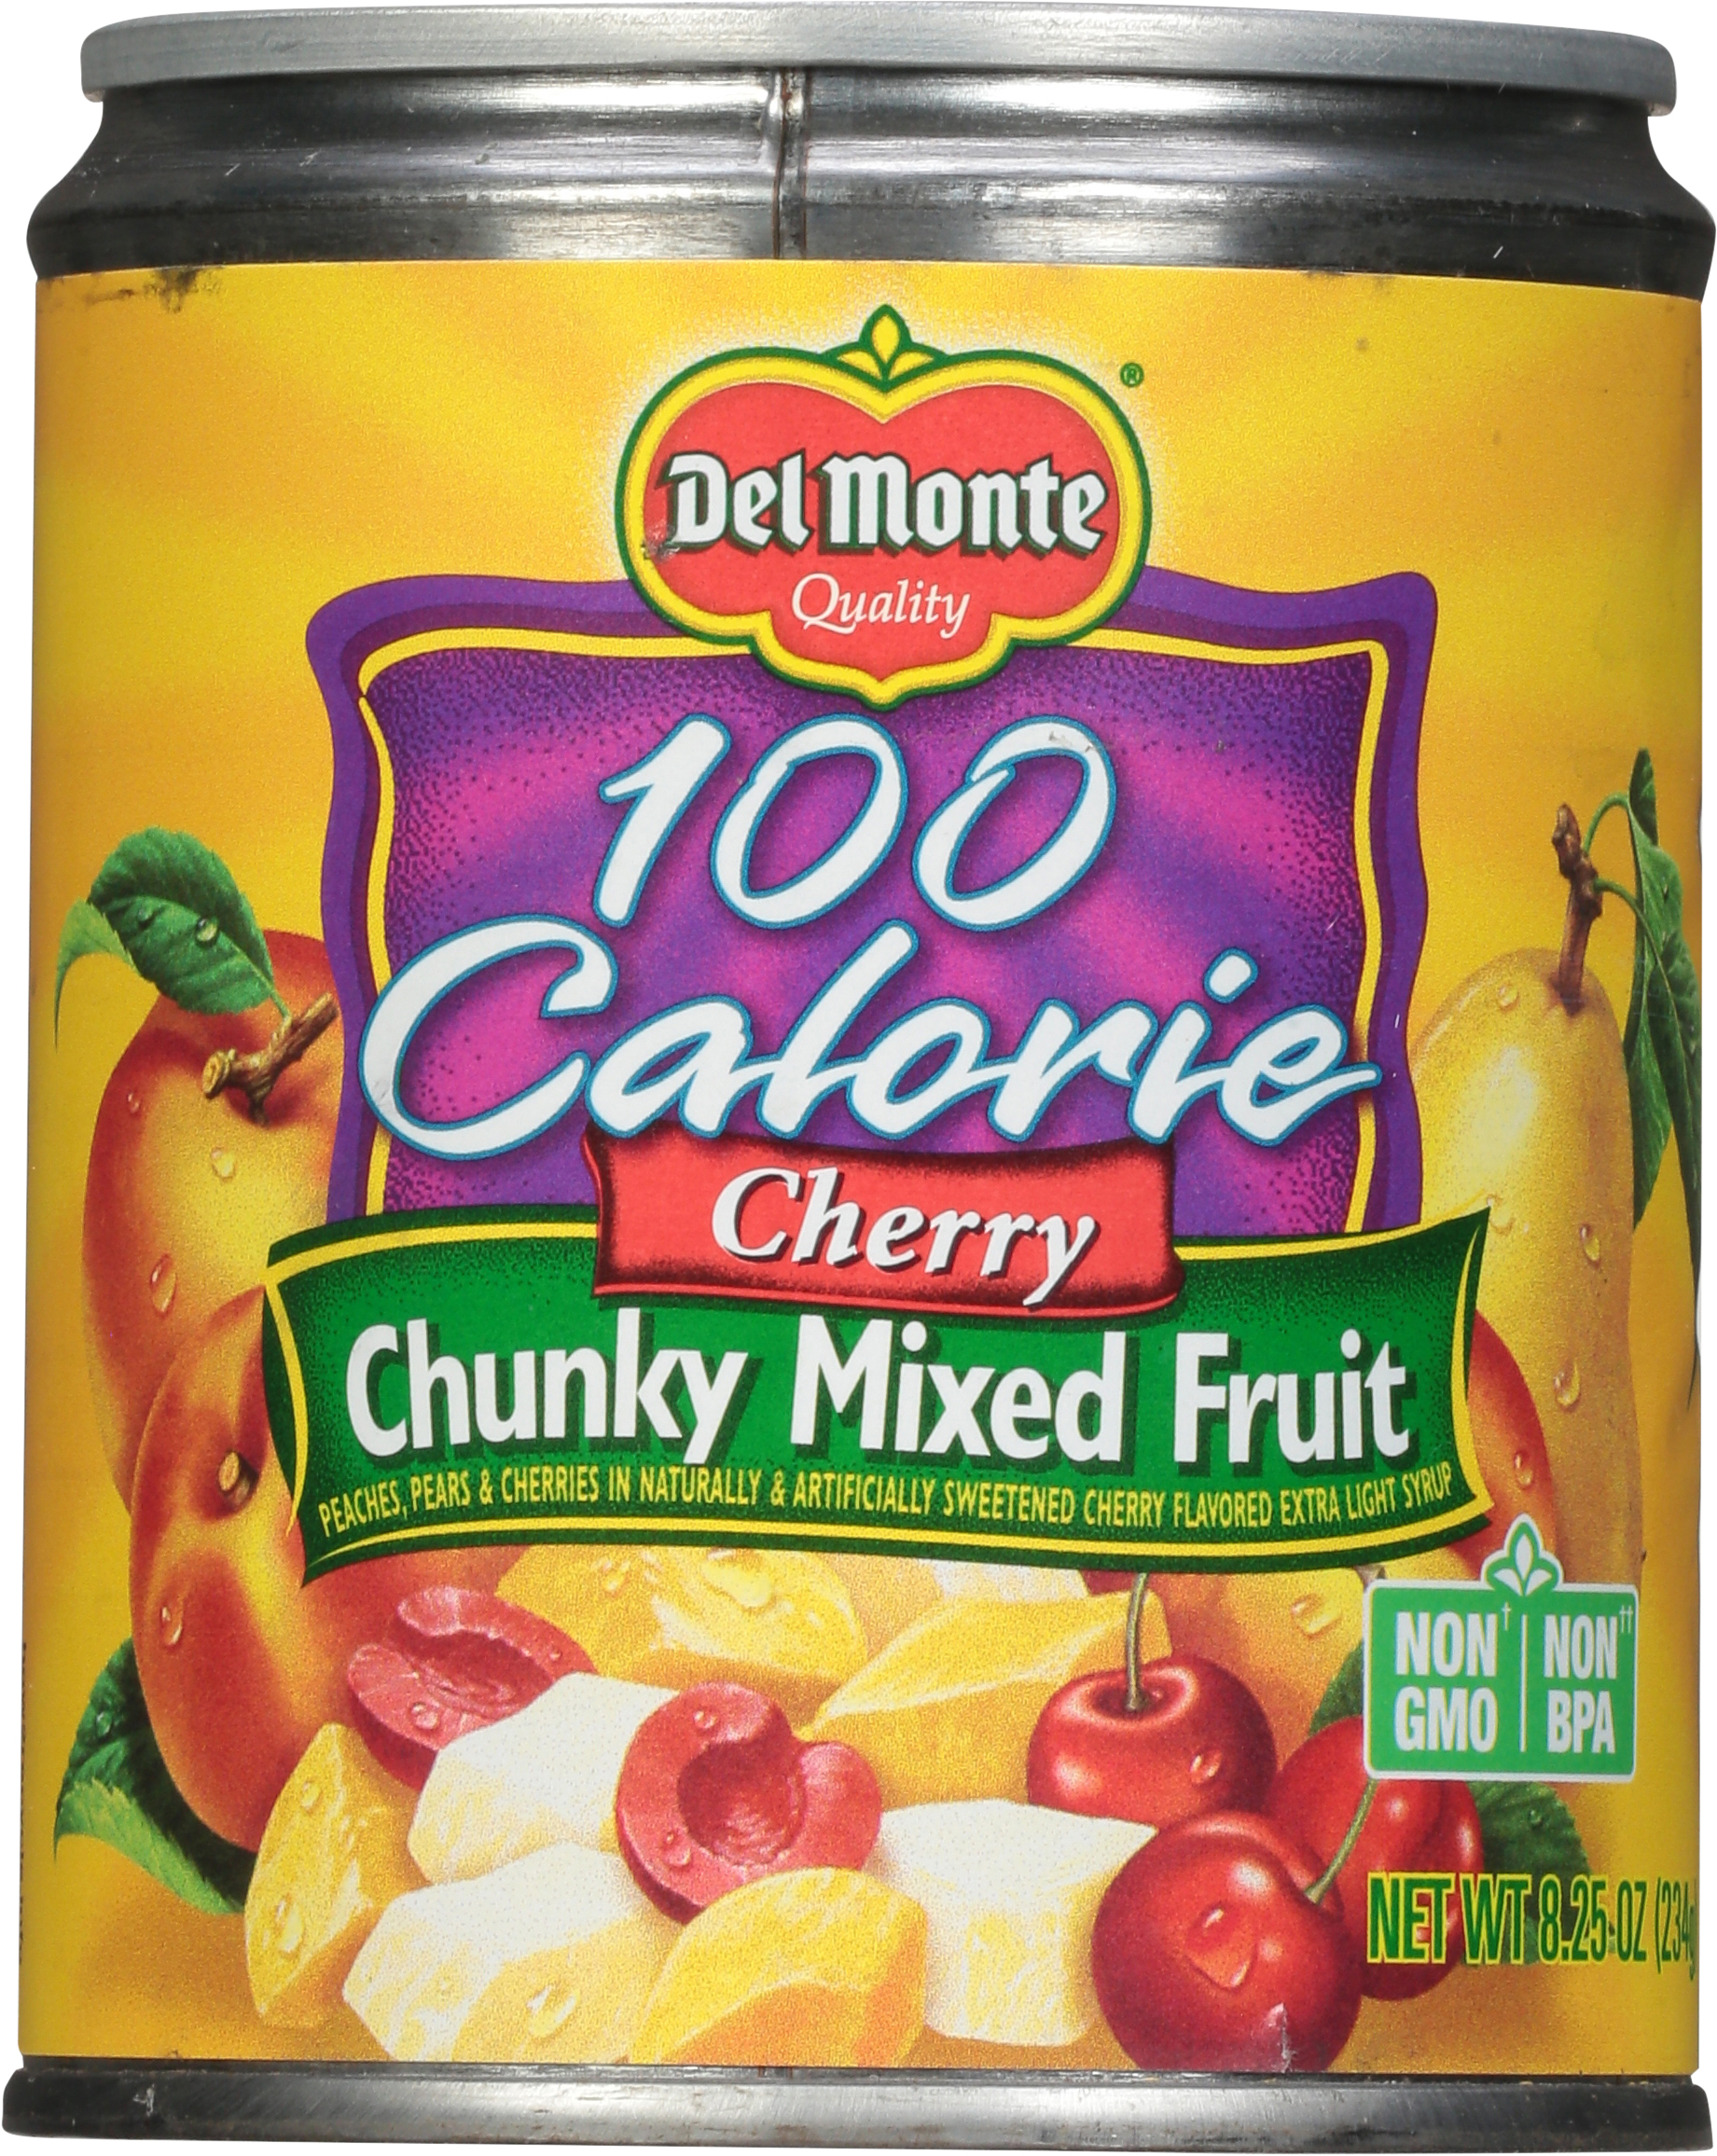 Chunky Mixed Fruit, Cherry image